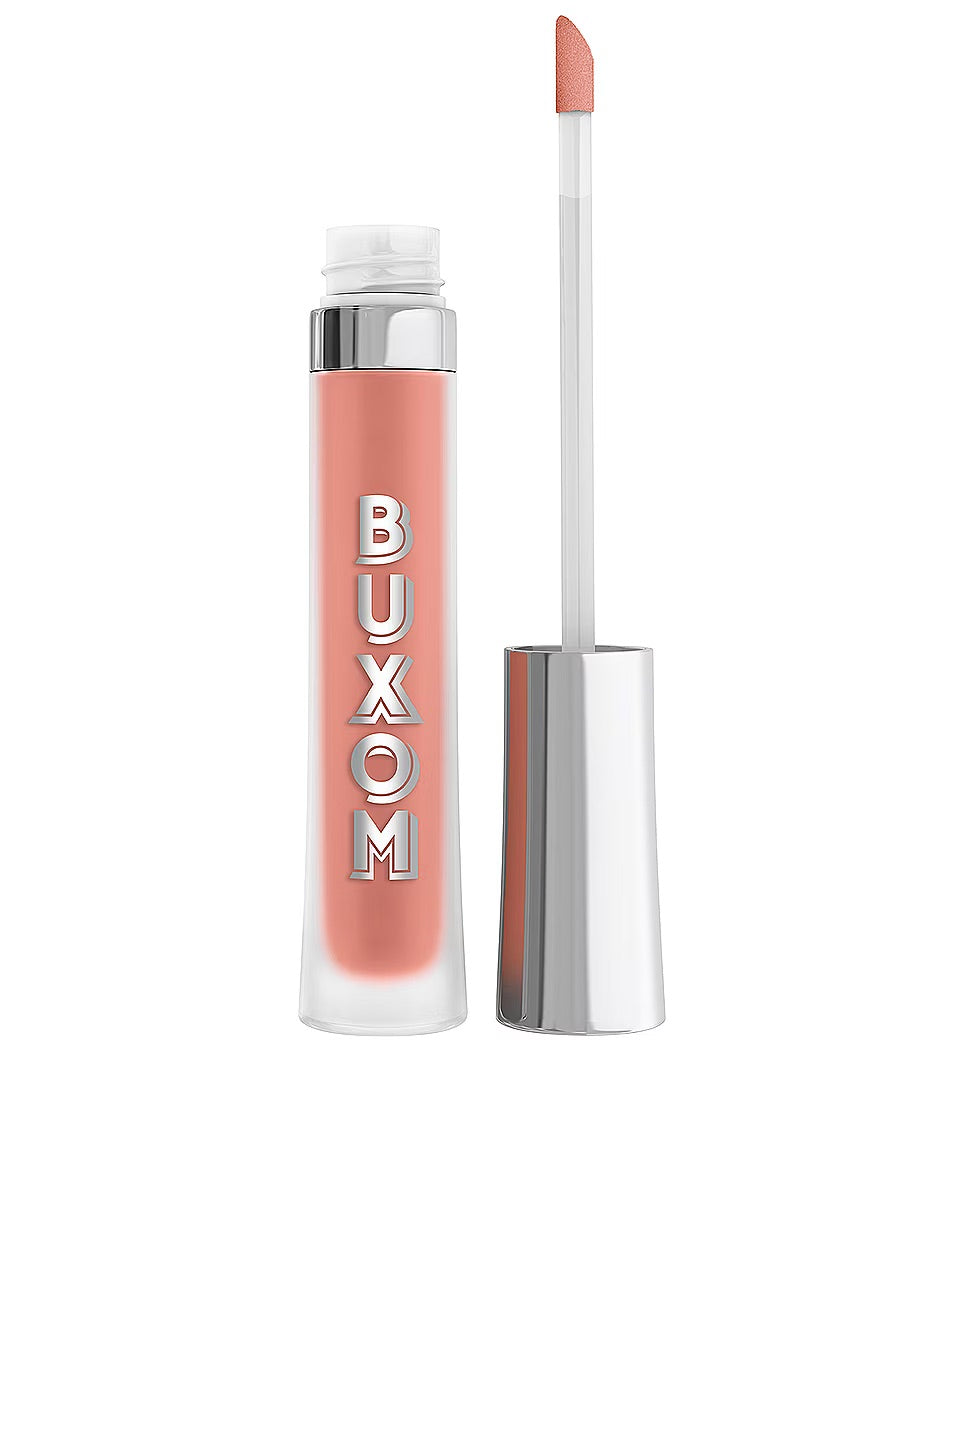 Buxom - Full-On™ Plumping Lip  Cream Gloss - White Russian